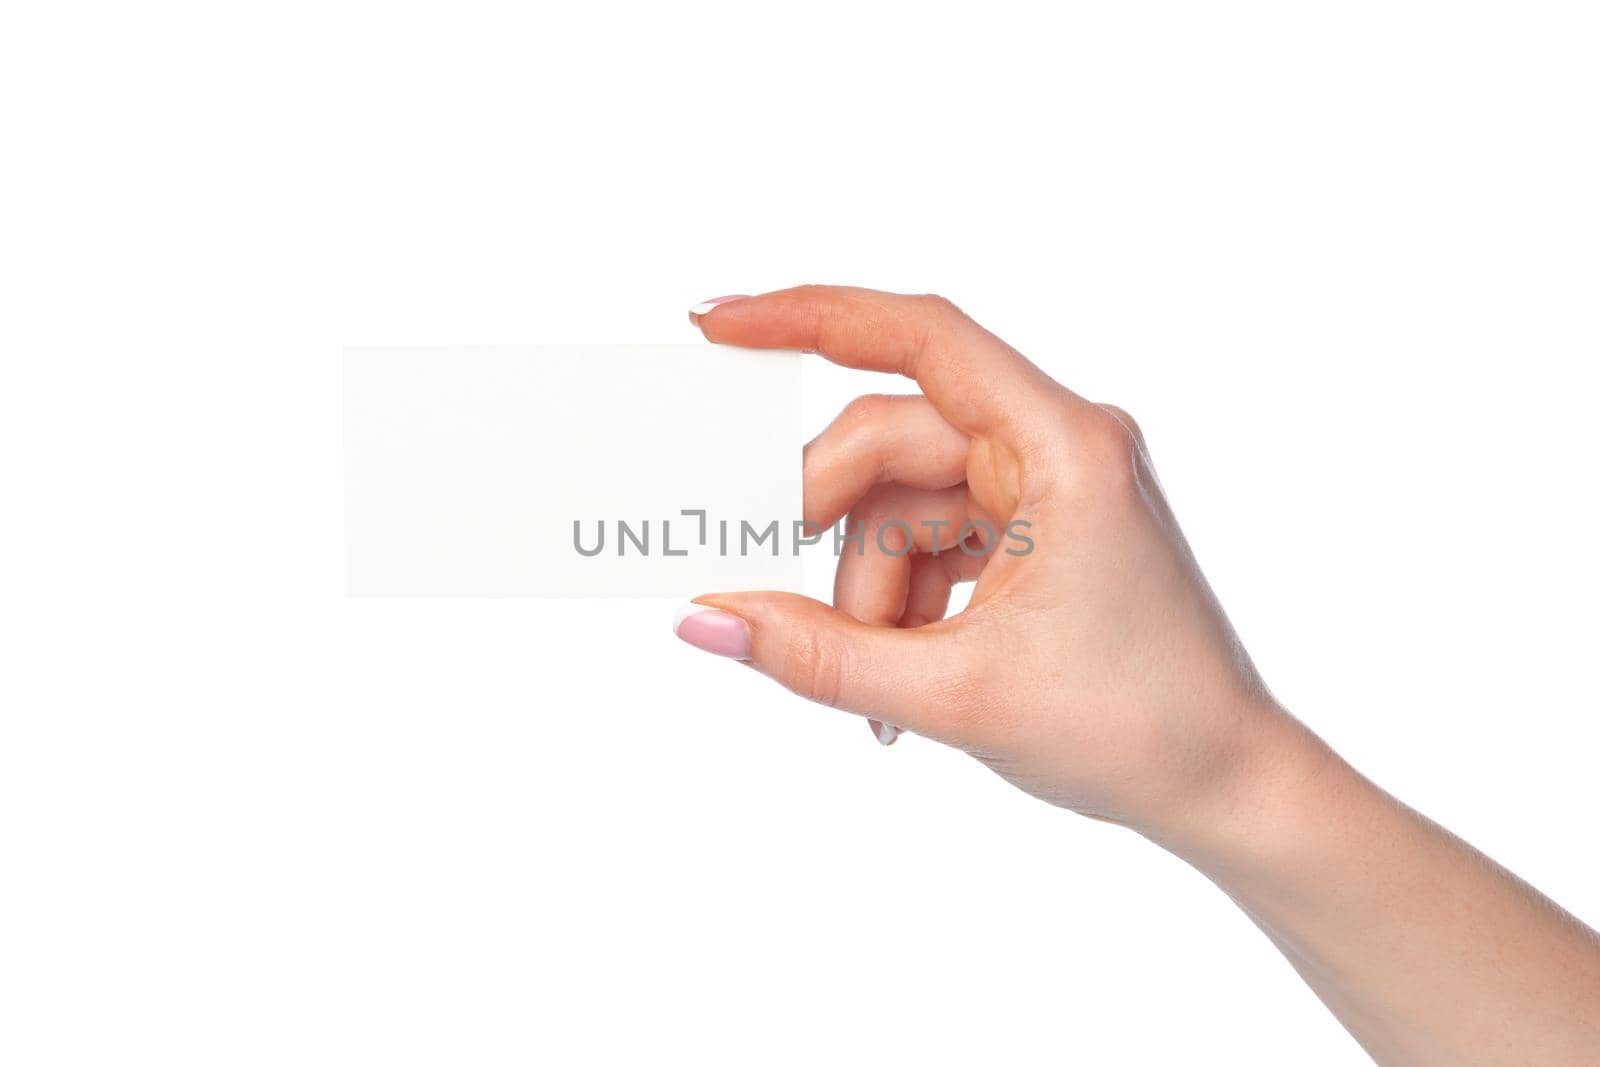 Beautiful female hand holding white business card isolated on white background